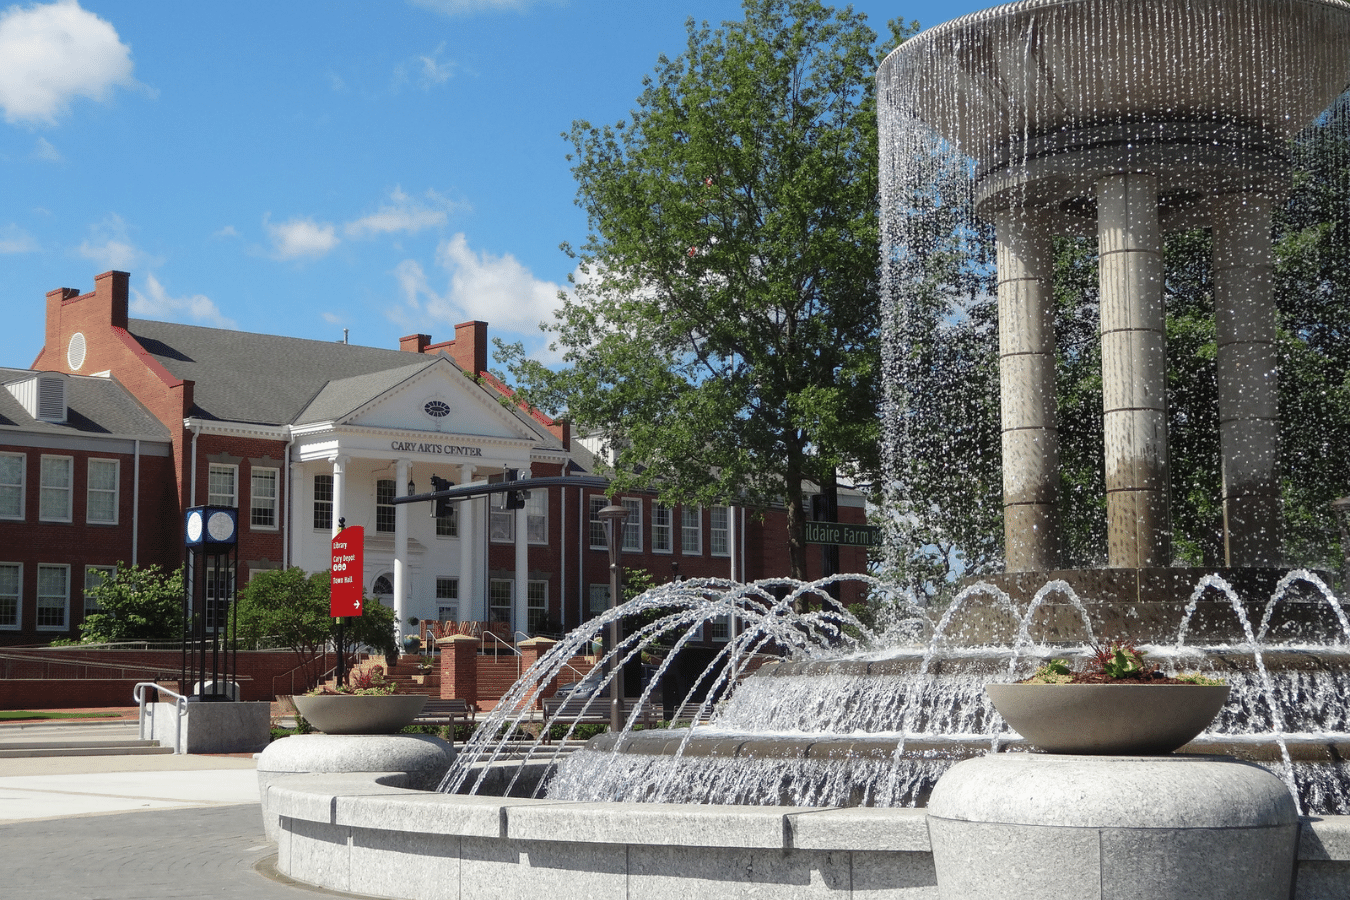 Downtown Cary Arts center of Cary North Carolina